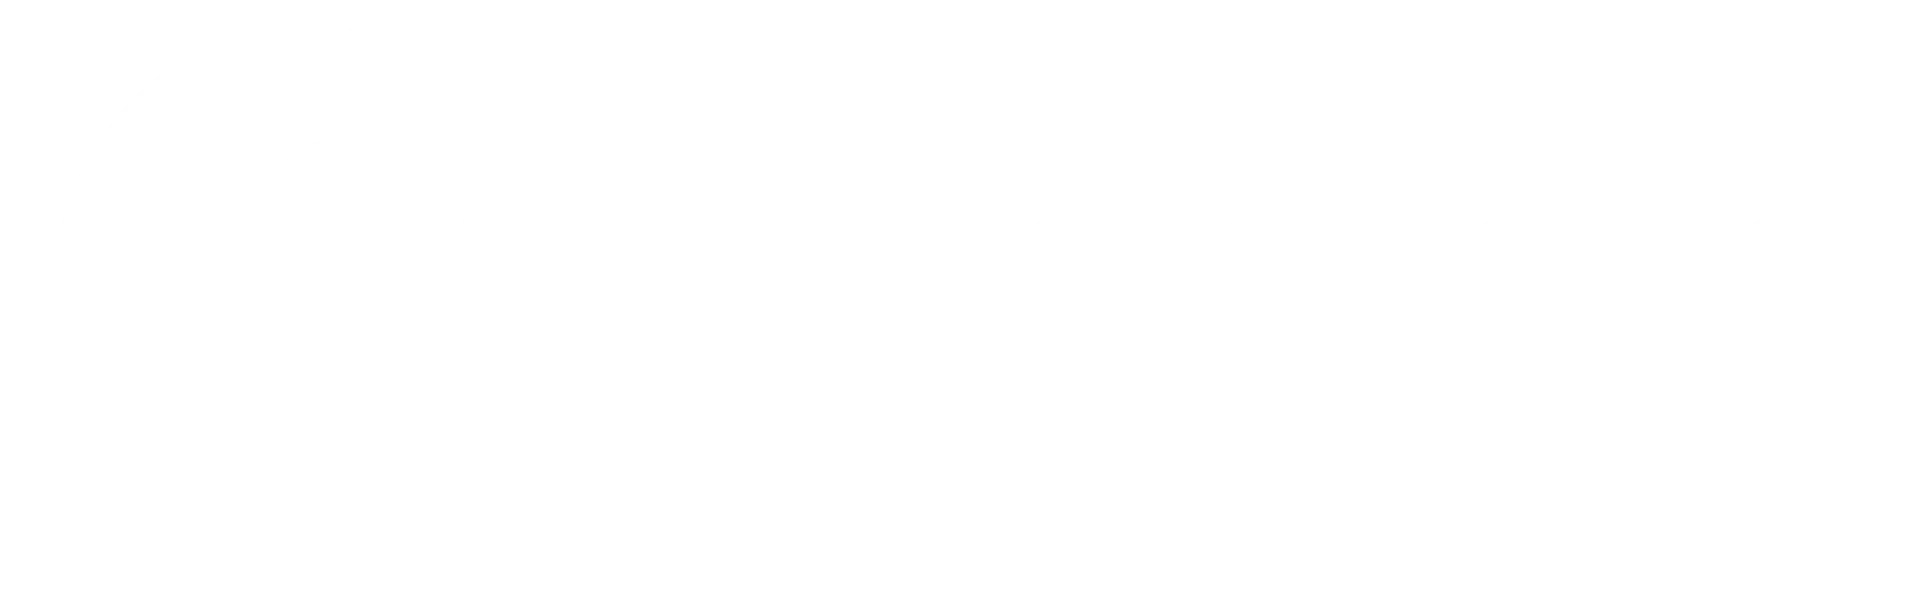 Branding of Eridan Group, Eridan Space Logo by Qeola